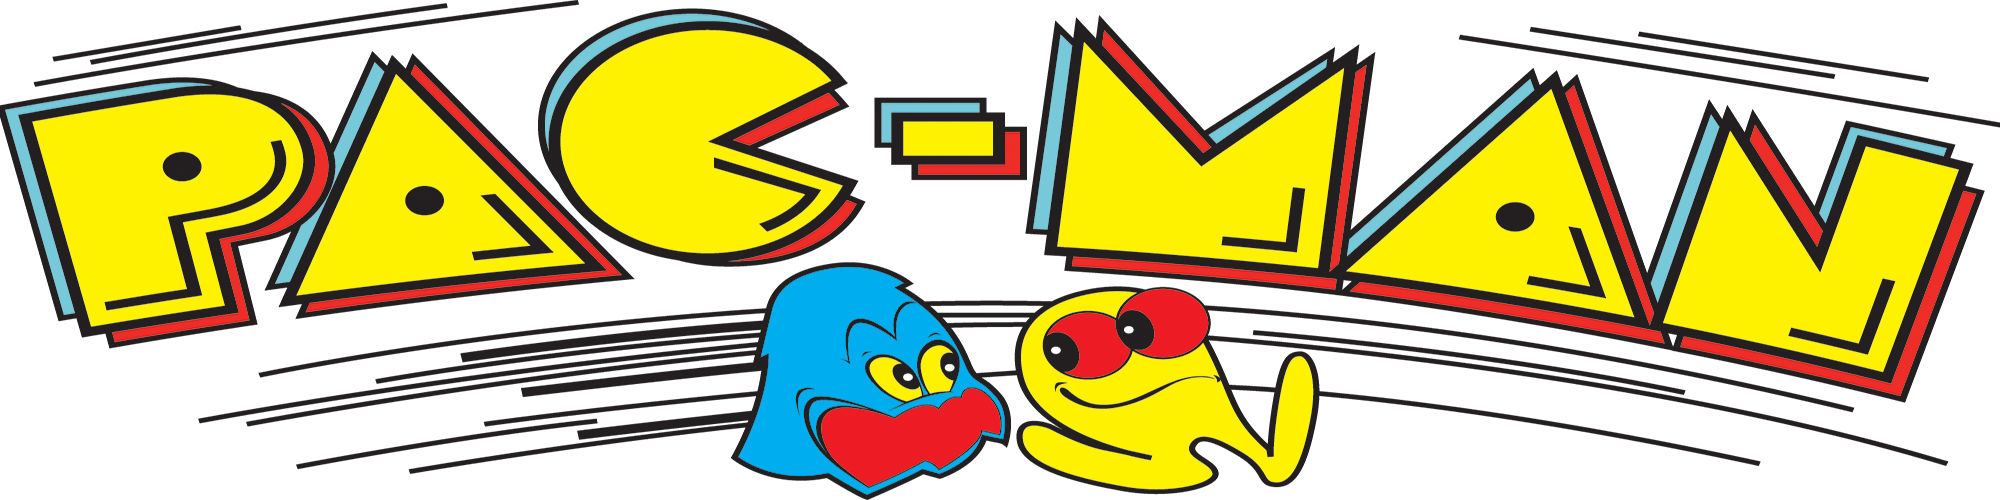 Retro And Vintage Arcade Console Repairs - Pac Man Arcade Marquee (2000x500)